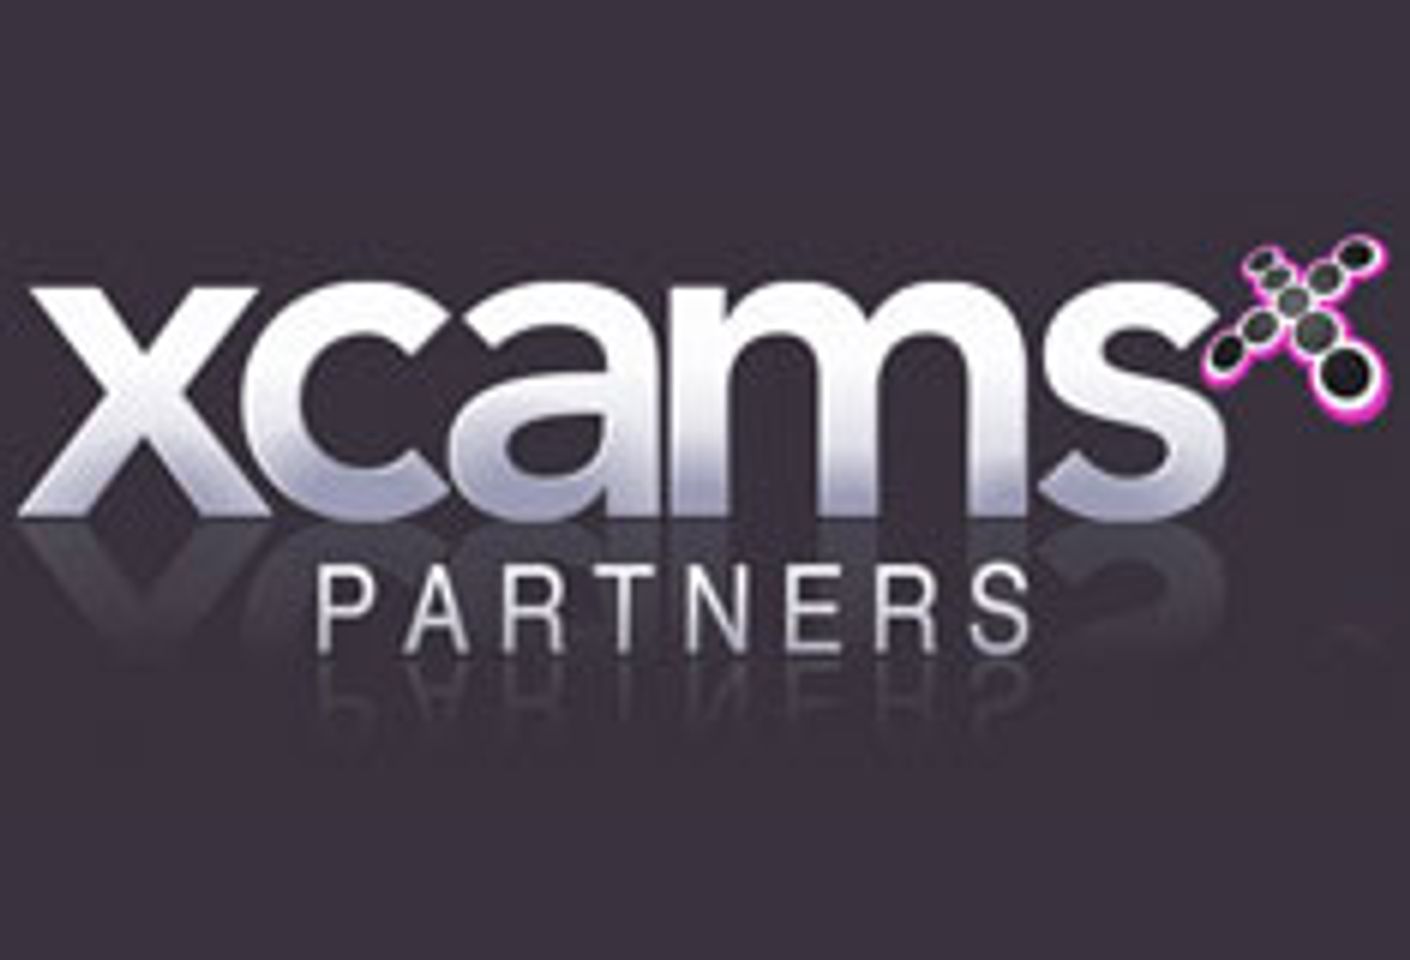 Meet XcamsPartners at the European Summit